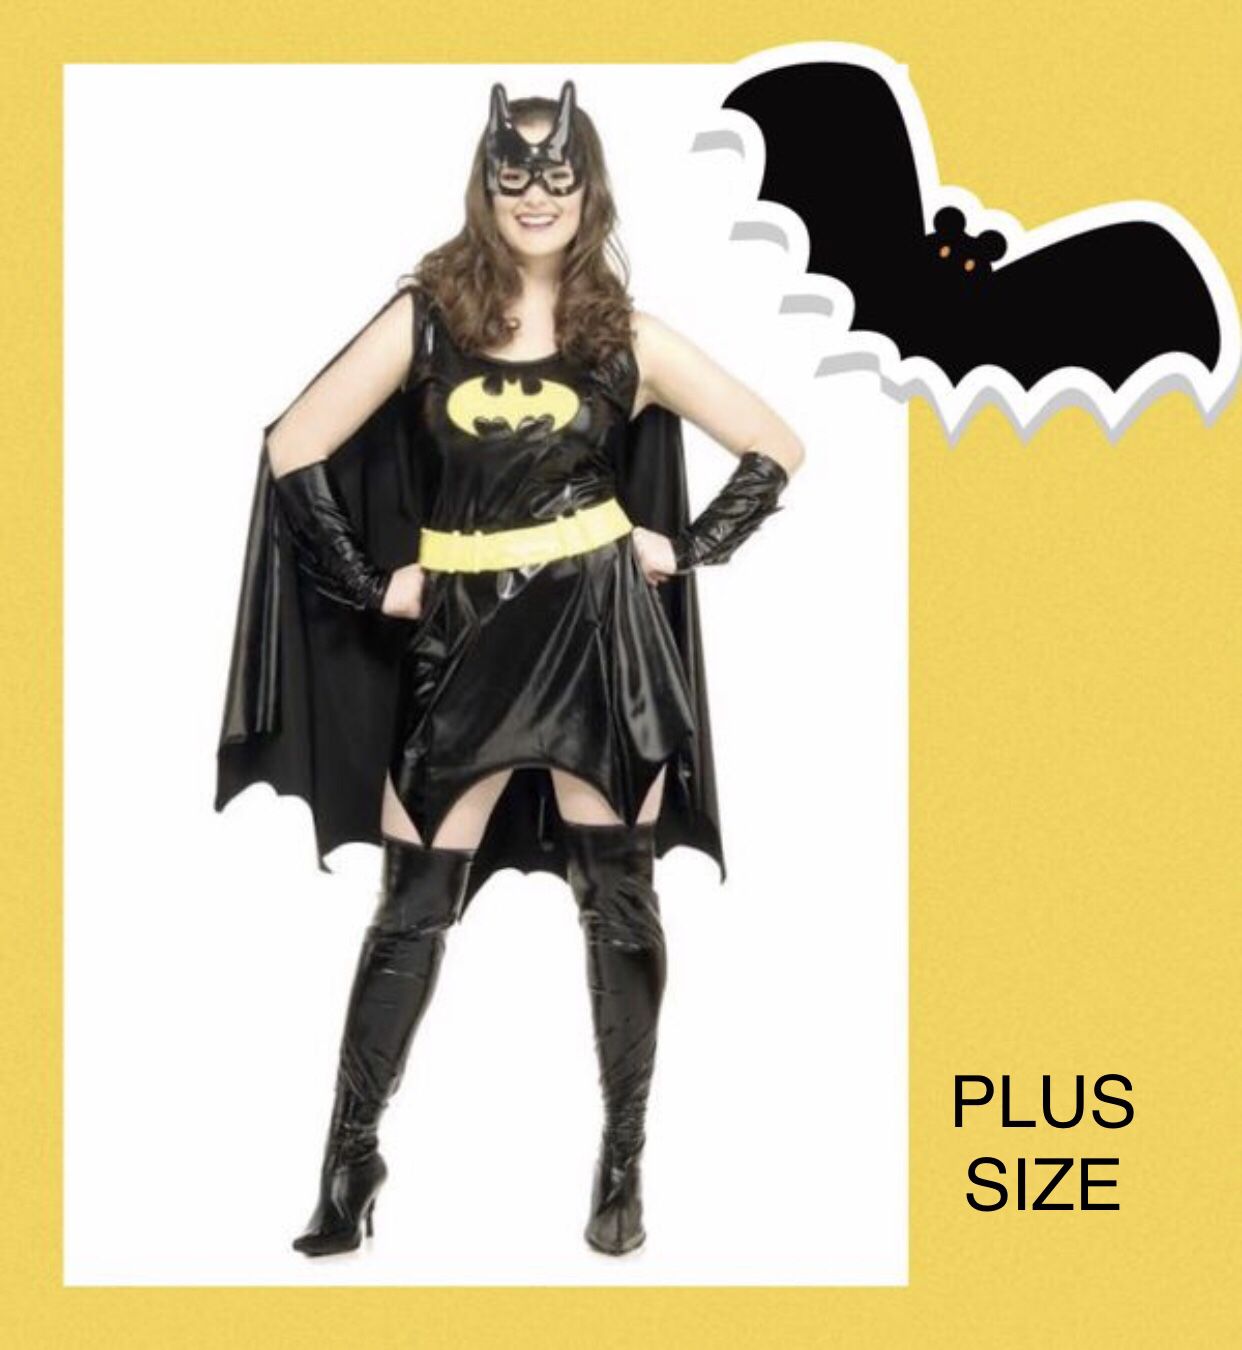 “THE BAT 🦇 GIRL!” Women’s deluxe premium pleather plus size bat girl costume SIZE XL - NEW!